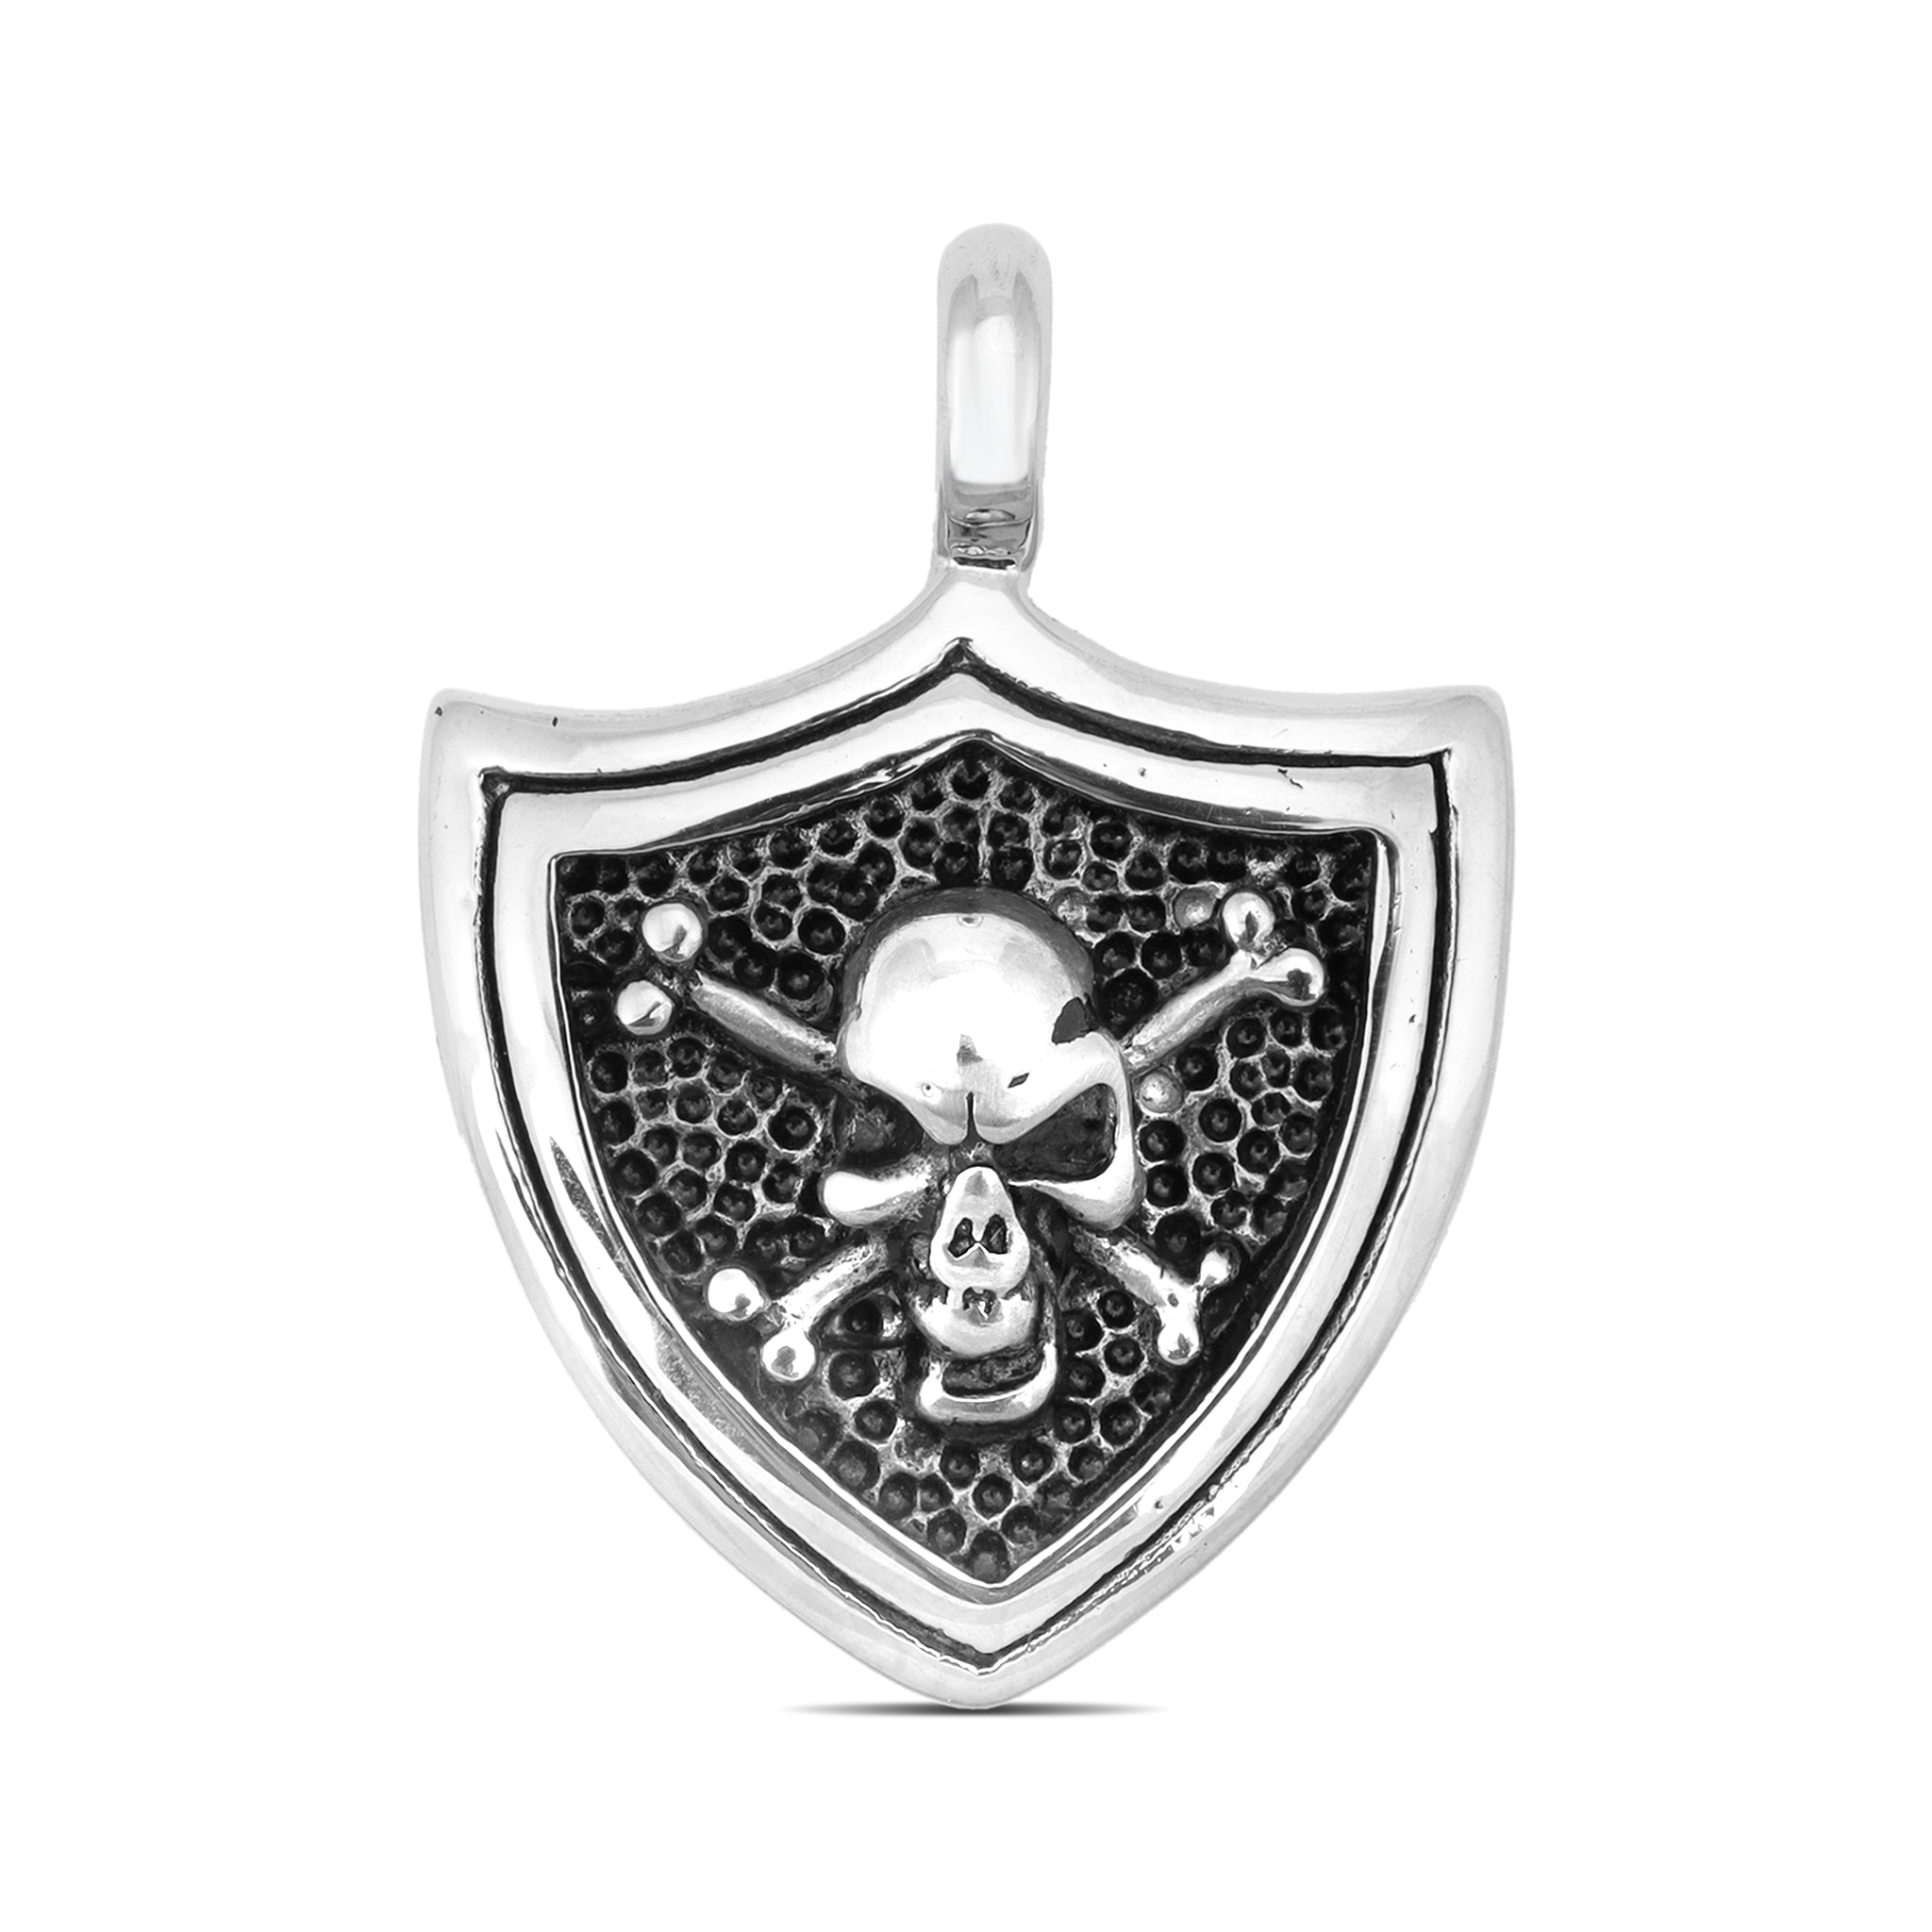 Stainless Steel Skull And Crossbones Shield Pendant / PDK0150